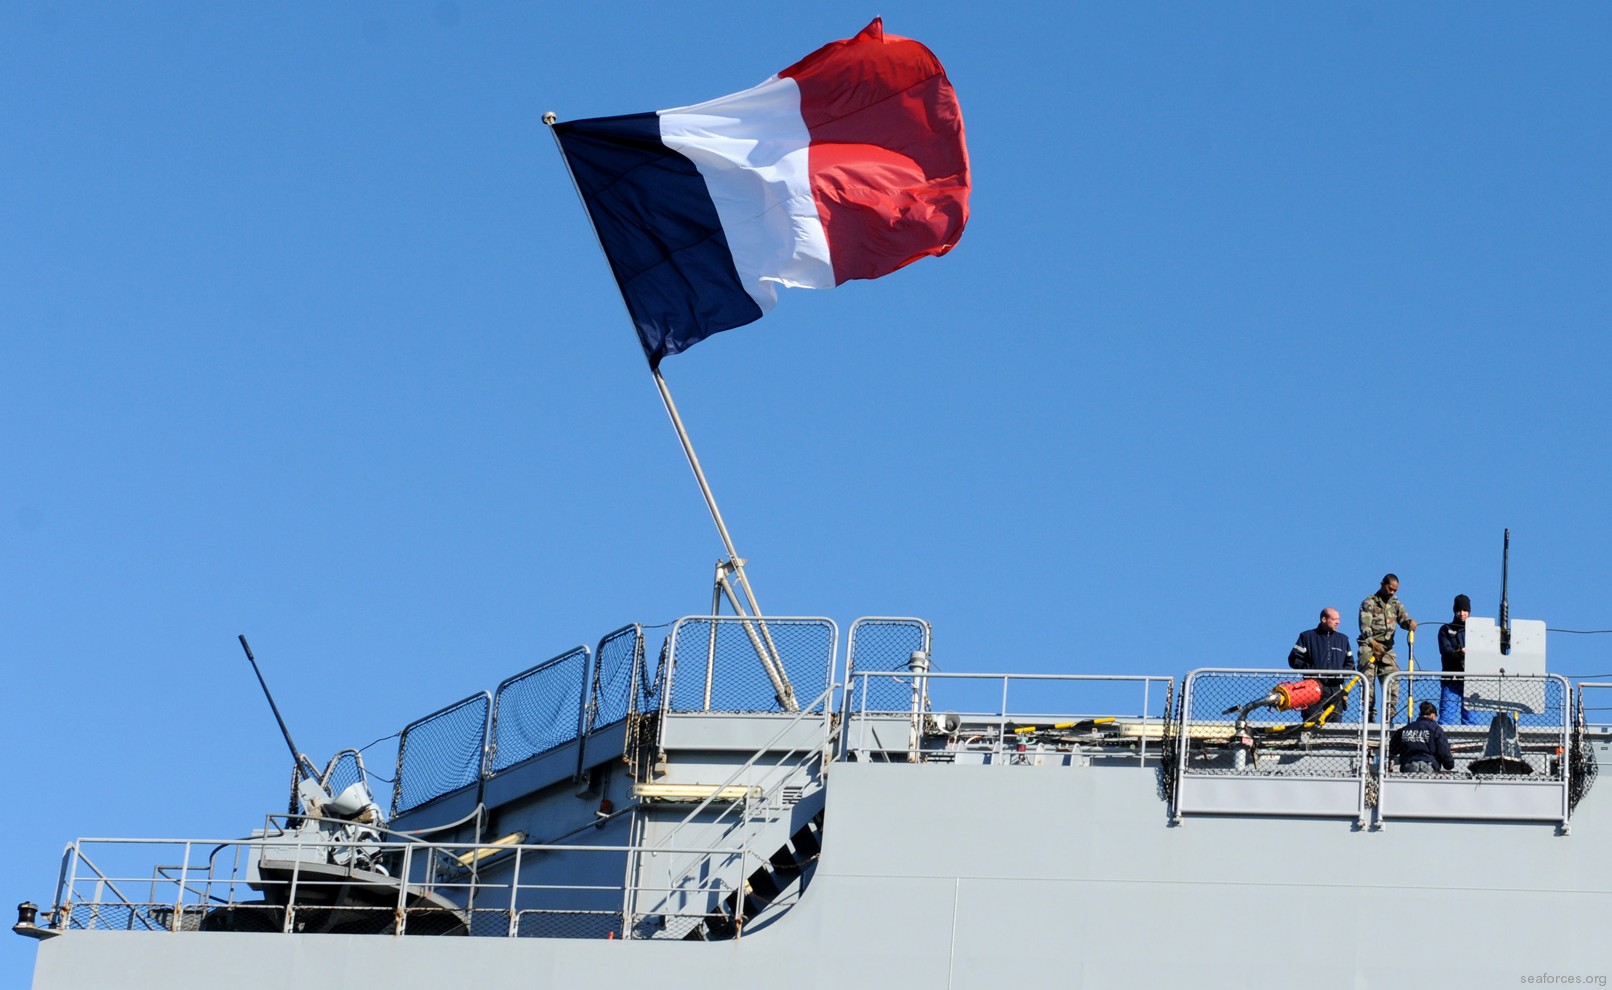 mistral class amphibious assault command ship lph bpc french navy marine nationale 49c armament giat nexter 20f2 machine gun system